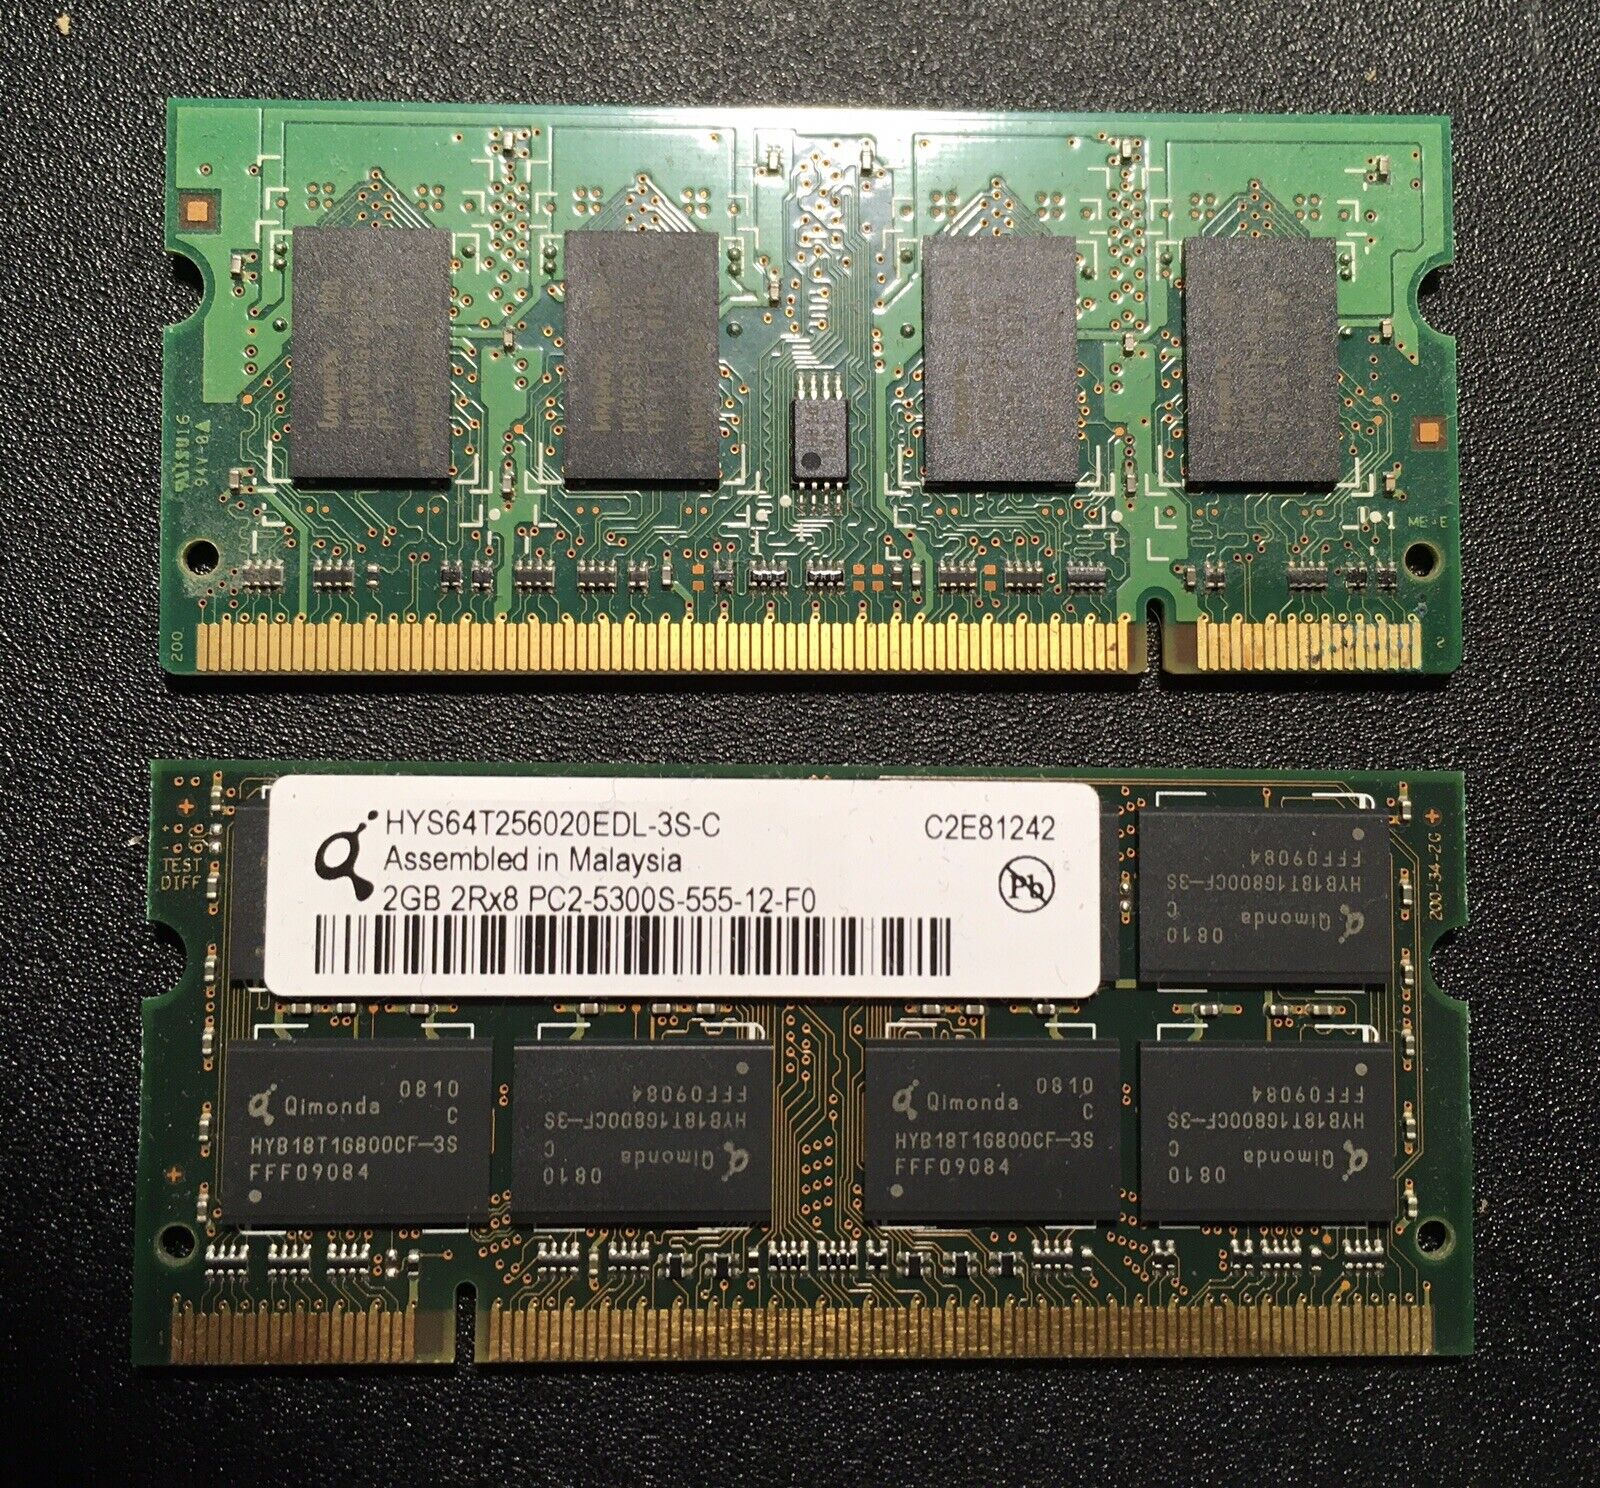 Laptop Memory Cards 2 GB + 1 GB = 3 GB total